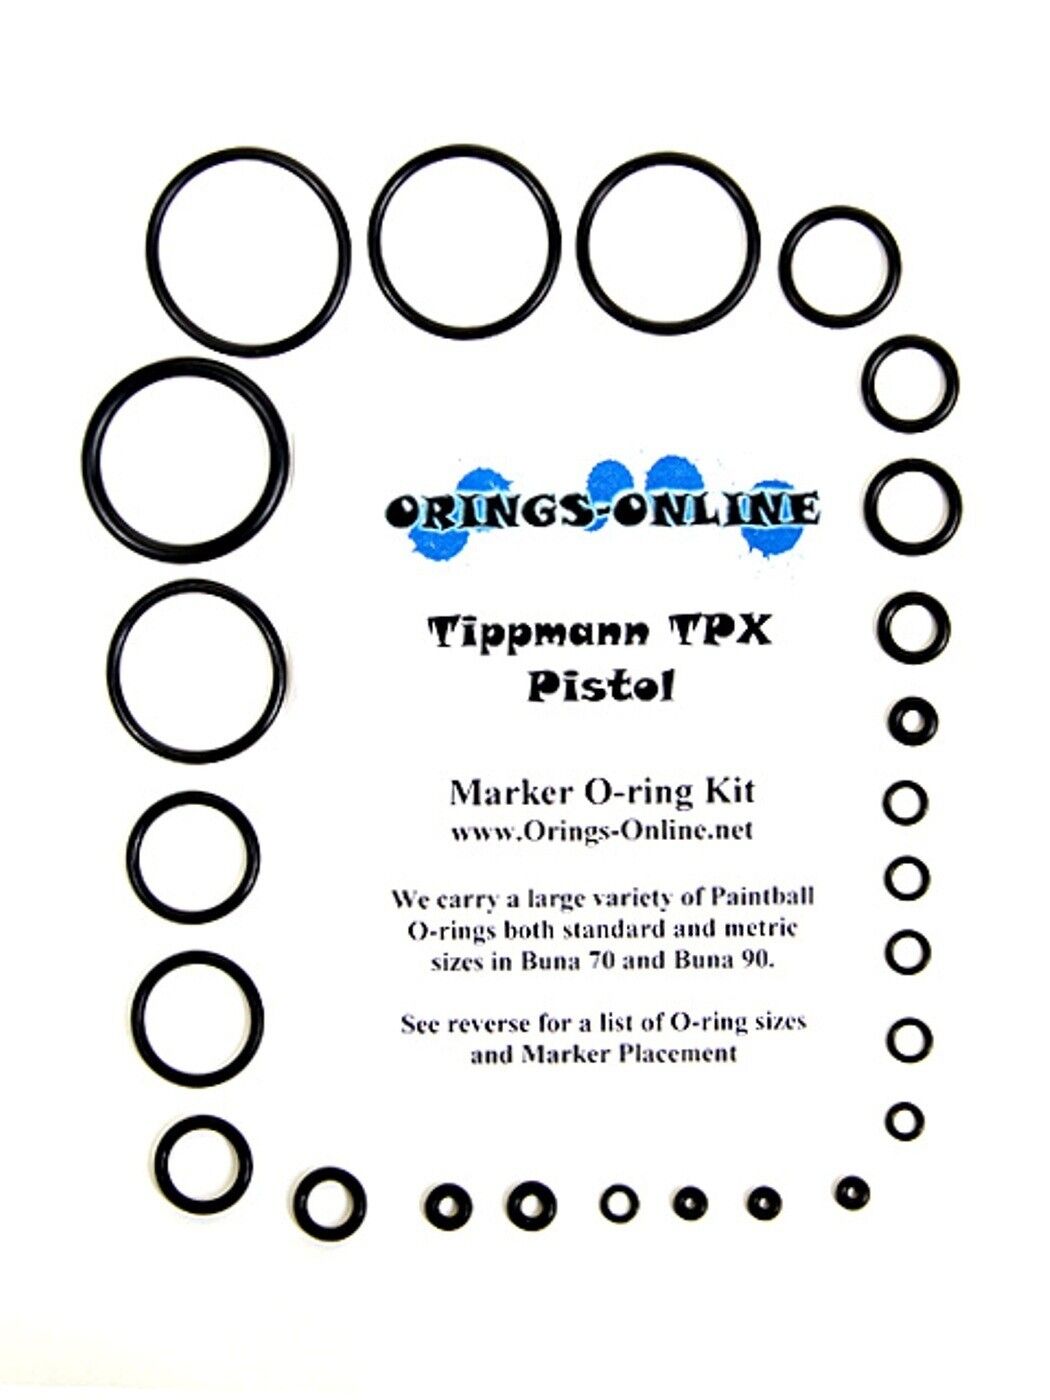 Tippmann TPX Paintball Marker O-ring Oring Kit x 4 rebuilds / kits